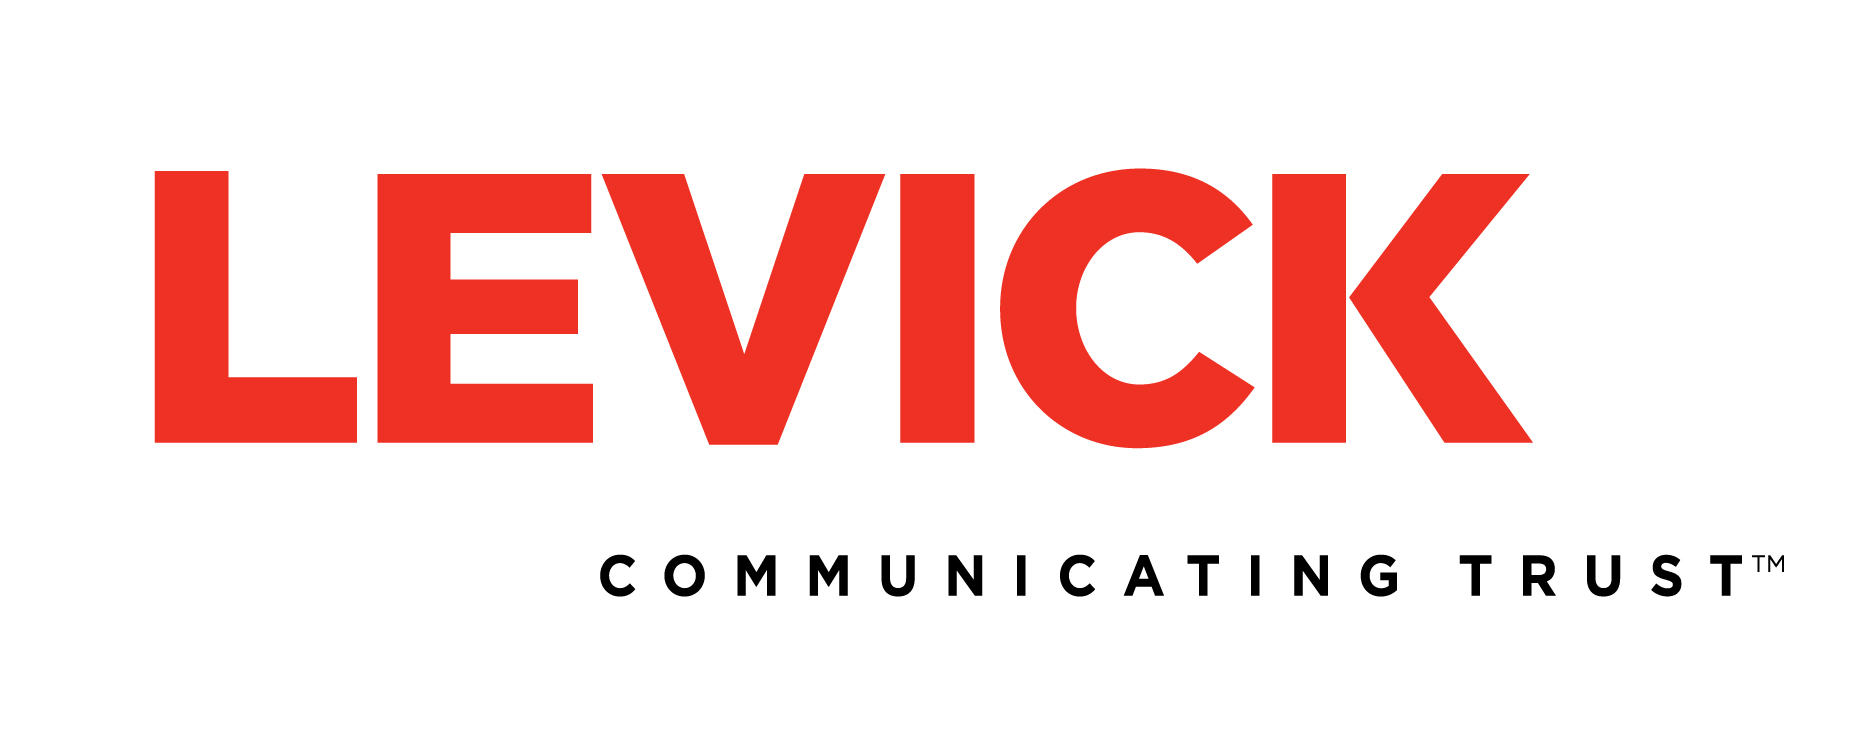  Top Finance Public Relations Company Logo: Levick